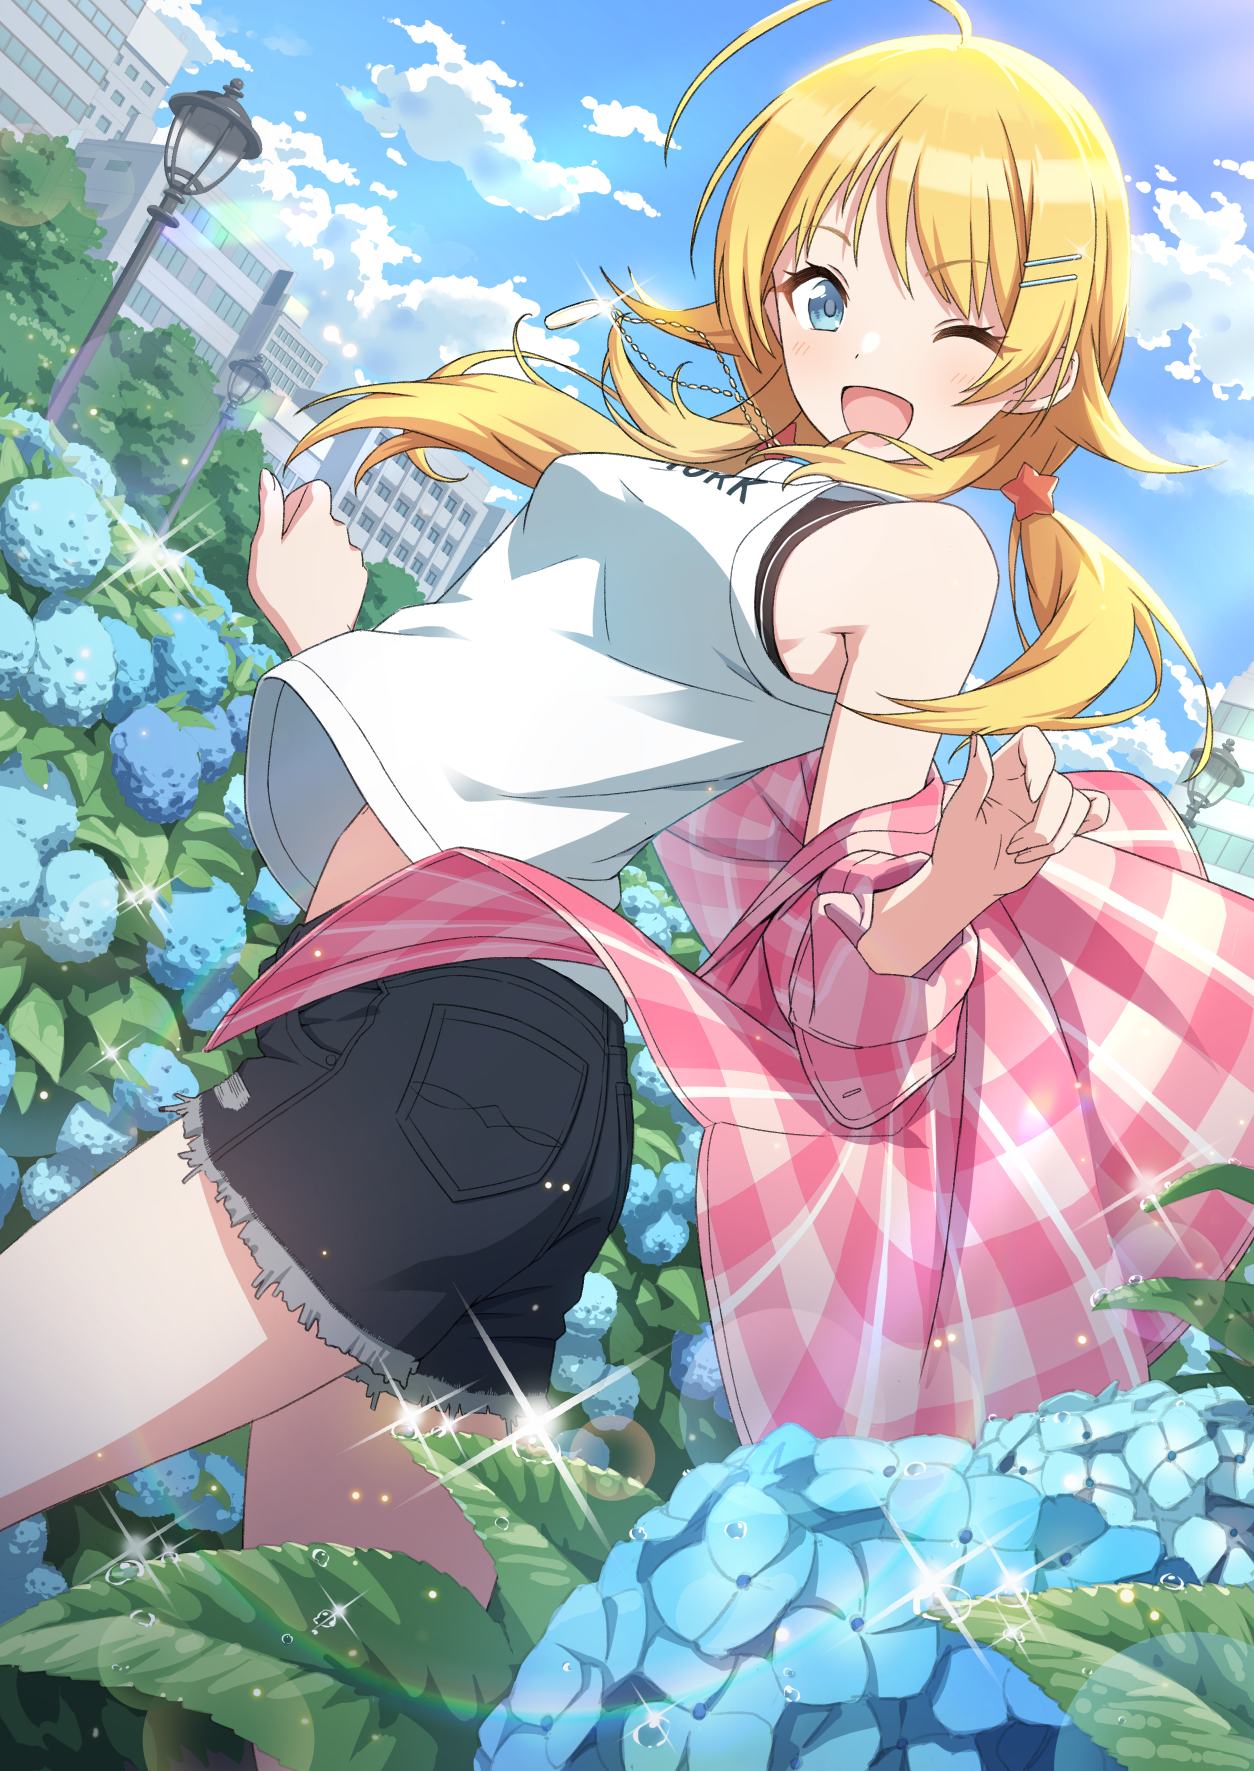 Anime 1254x1771 2D anime girls digital art artwork Amochin THE iDOLM@STER Hachimiya Meguru blonde blue eyes wink shorts flowers